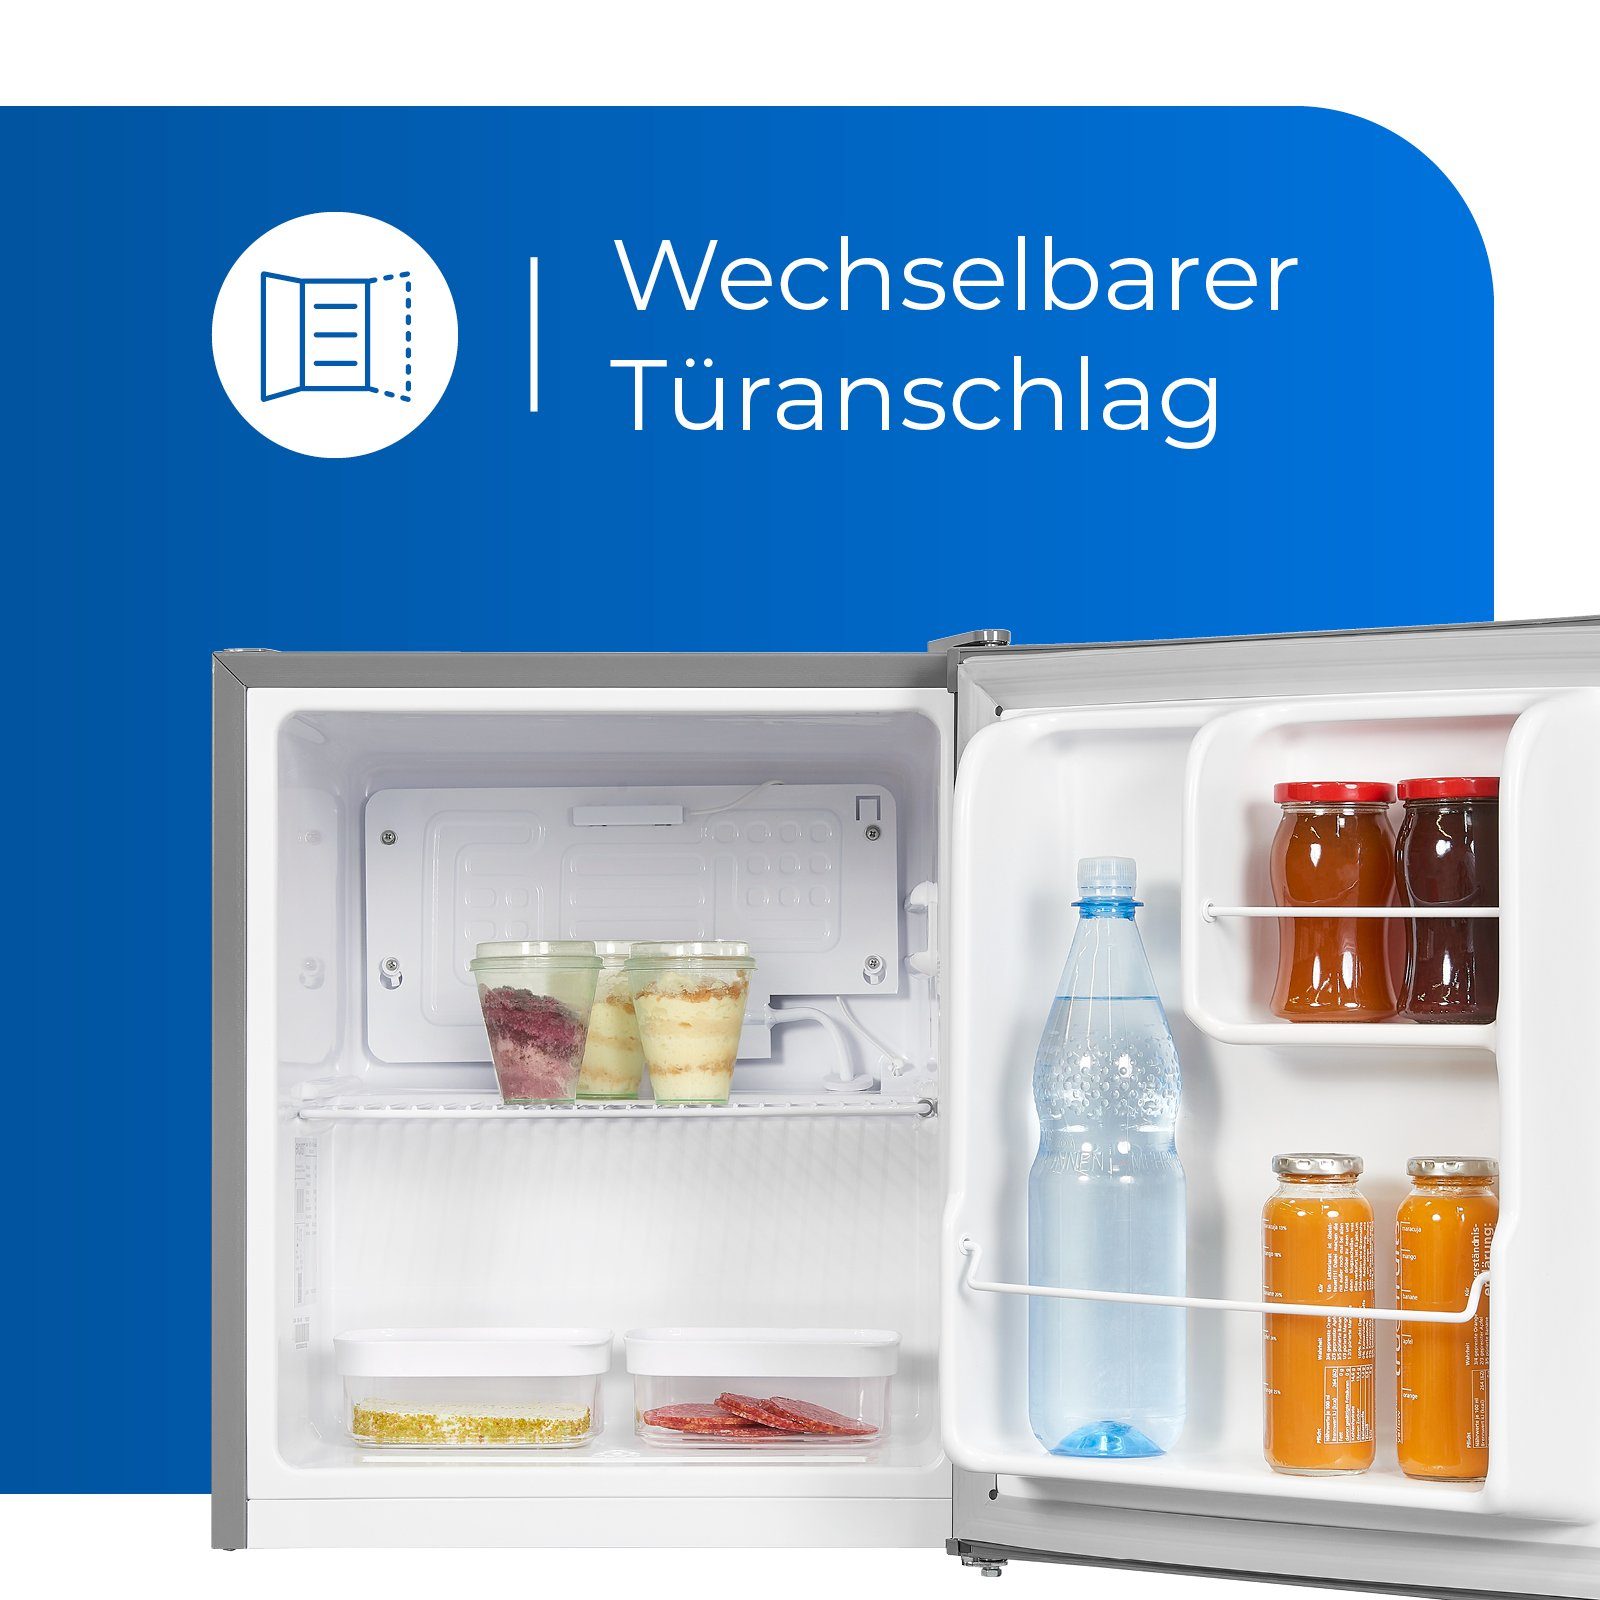 Table KB05-V-040E, Top kompakter Mini-Kühlschrank Farben Inoxlook verschiedenen exquisit Kühlschrank in